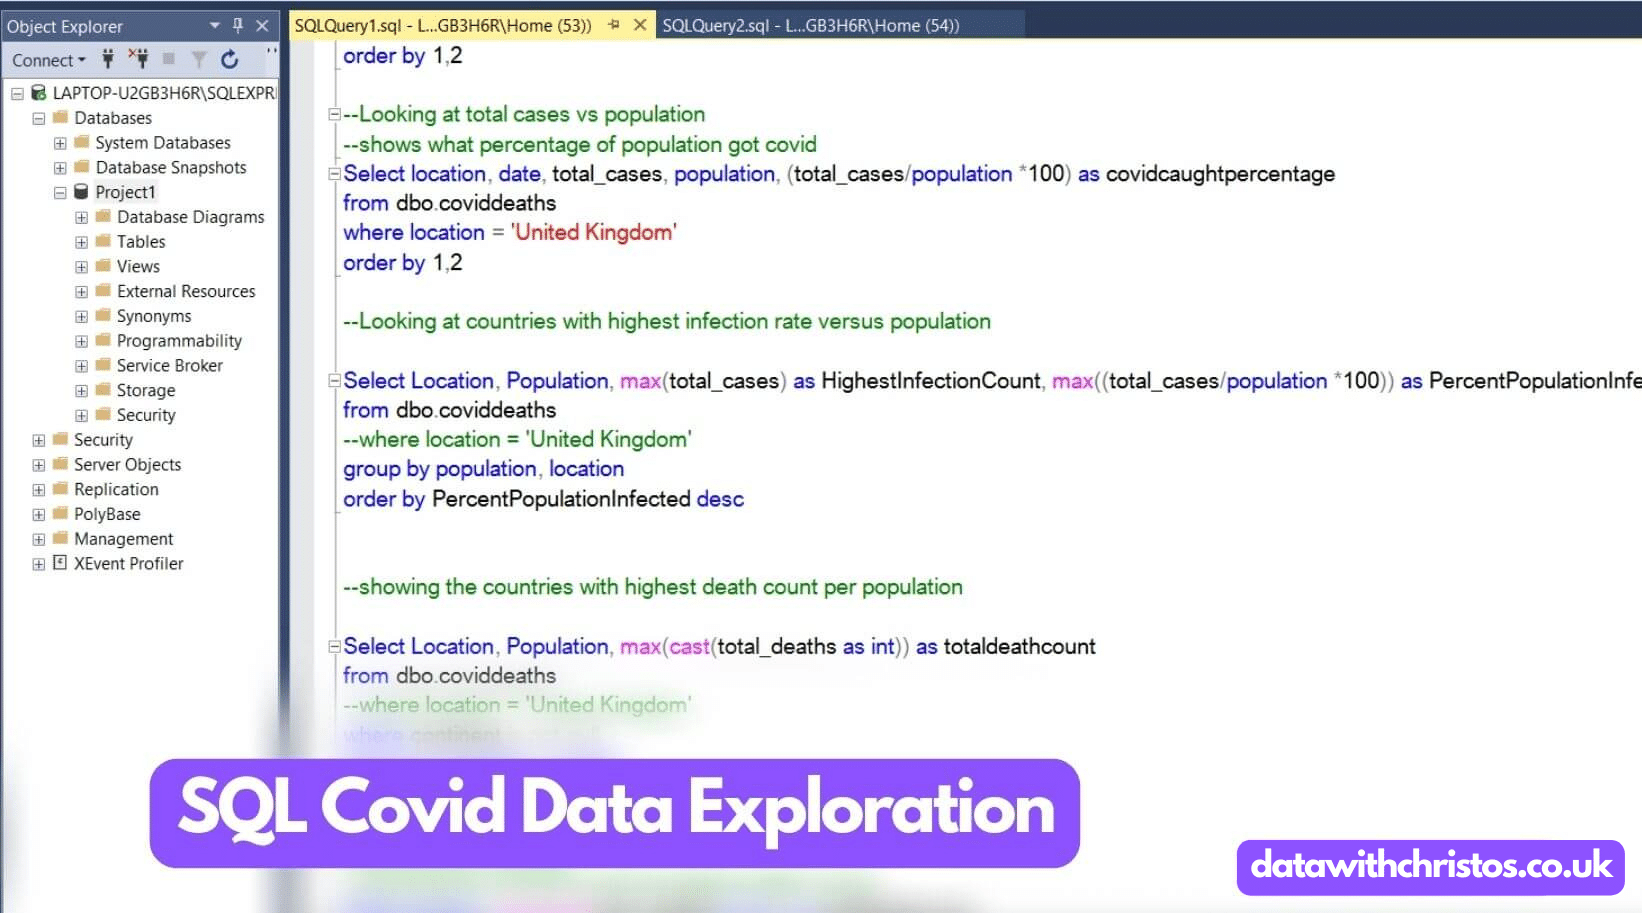 Covid Data Exploration